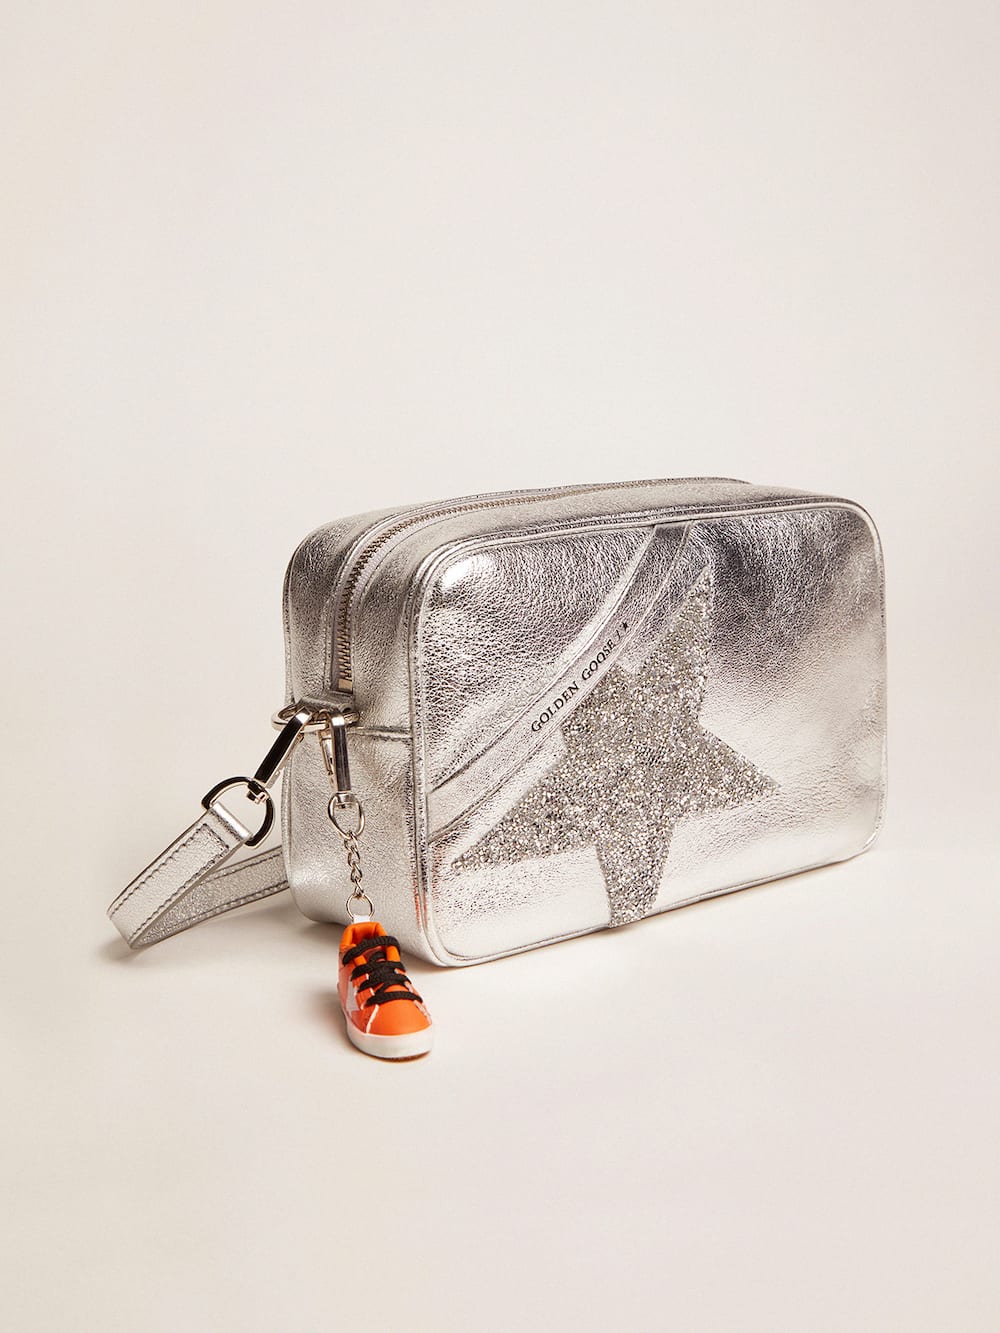 Golden Goose - Star Bag argentata in pelle laminata con stella in cristalli Swarovski in 